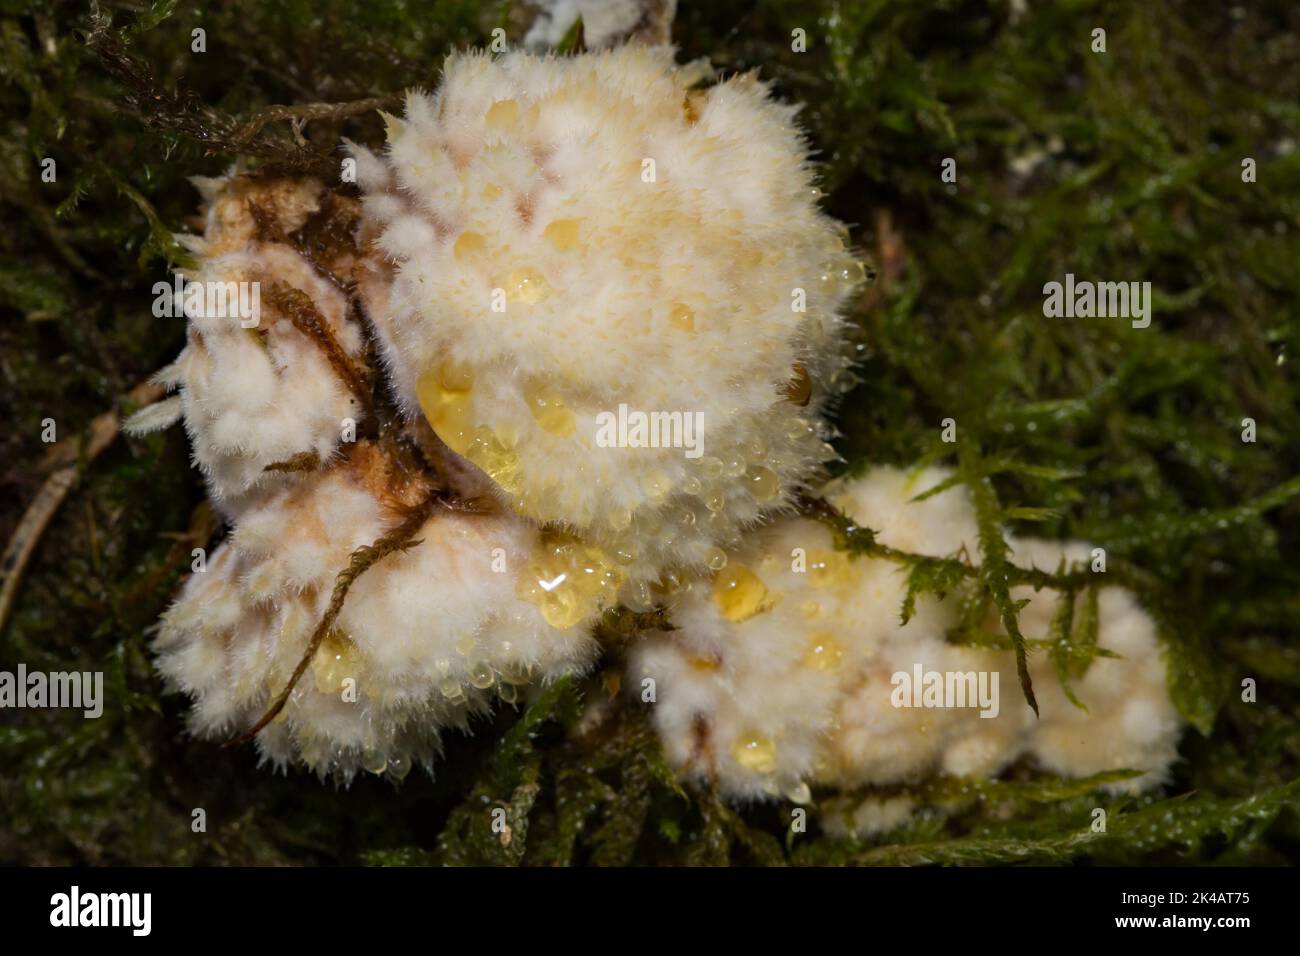 White cushion fungus white-yellowish fruiting body with yellow gutation drops in green moss Stock Photo